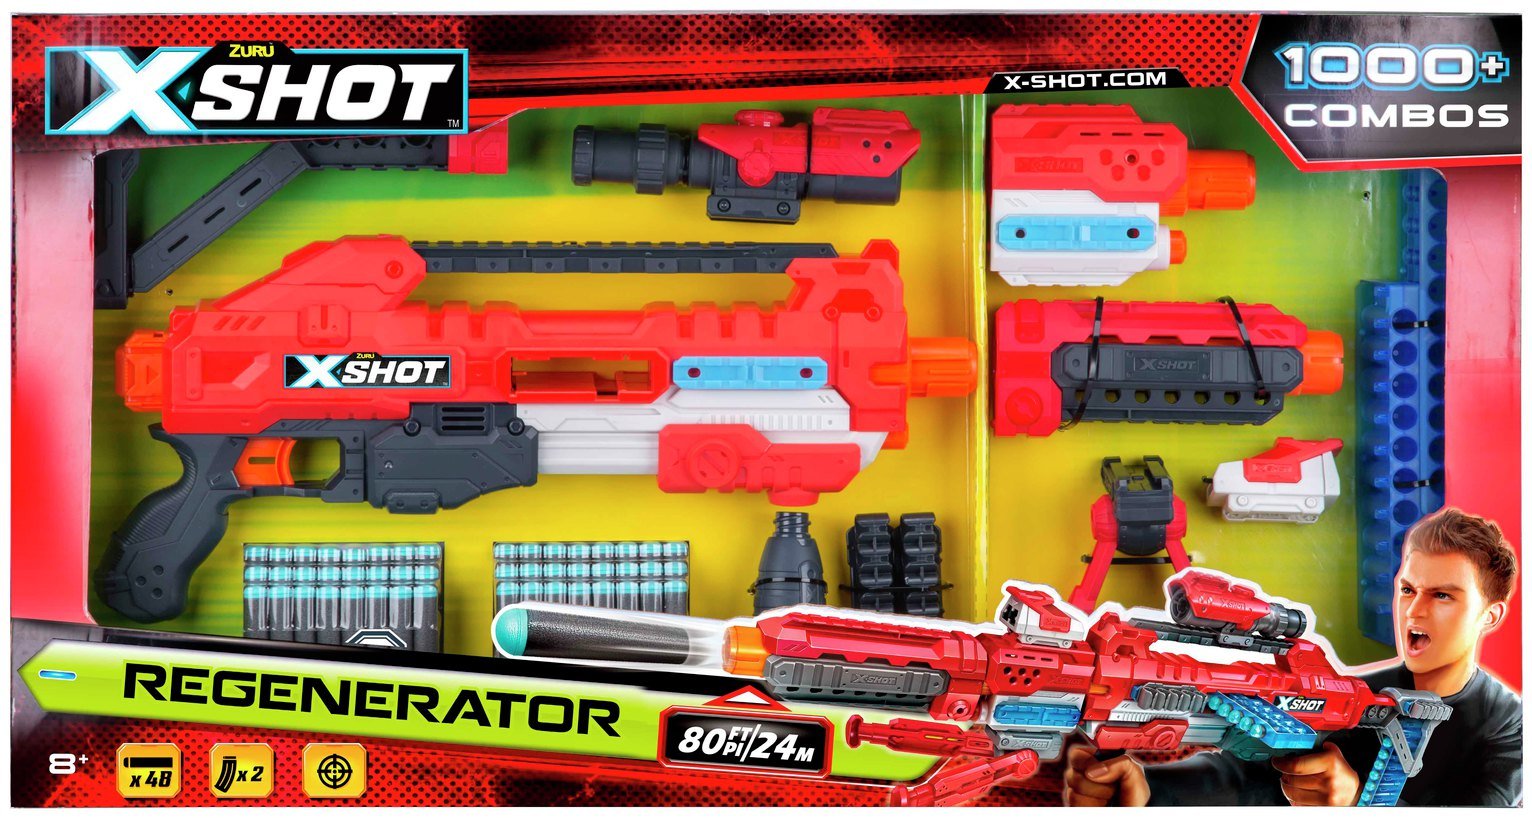 X-SHOT Clip Regenerator review